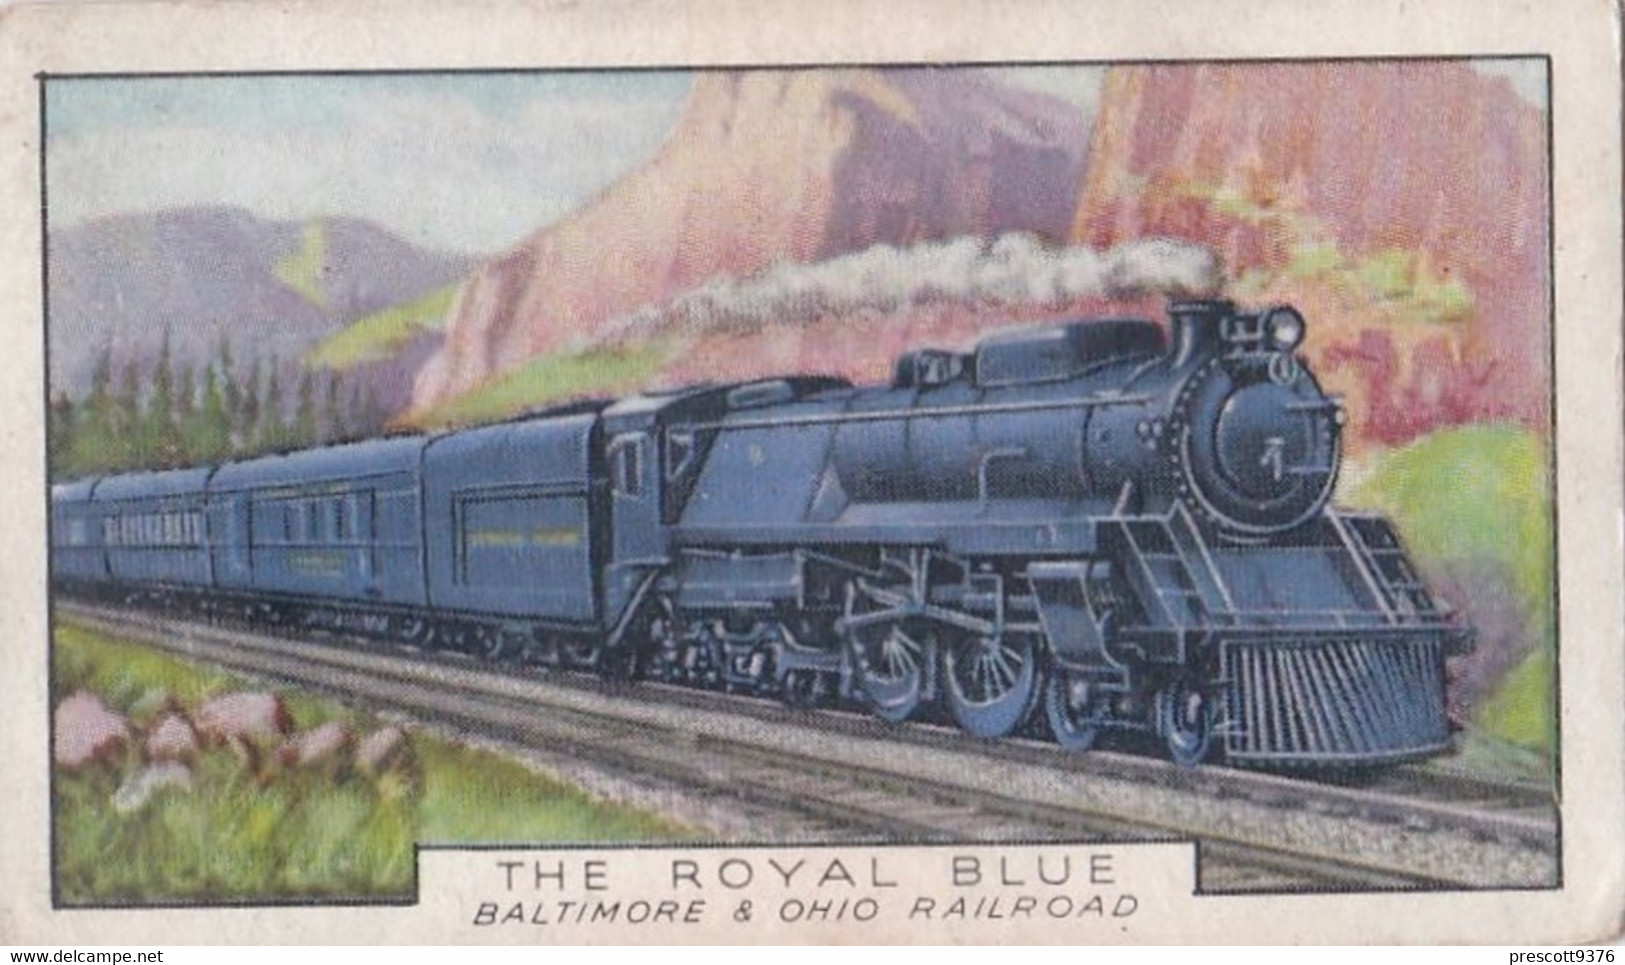 Trains Of The World 1937 - 15 Royal Blue Baltimore & Ohio Railways- Gallaher Cigarette Card - Original - Gallaher